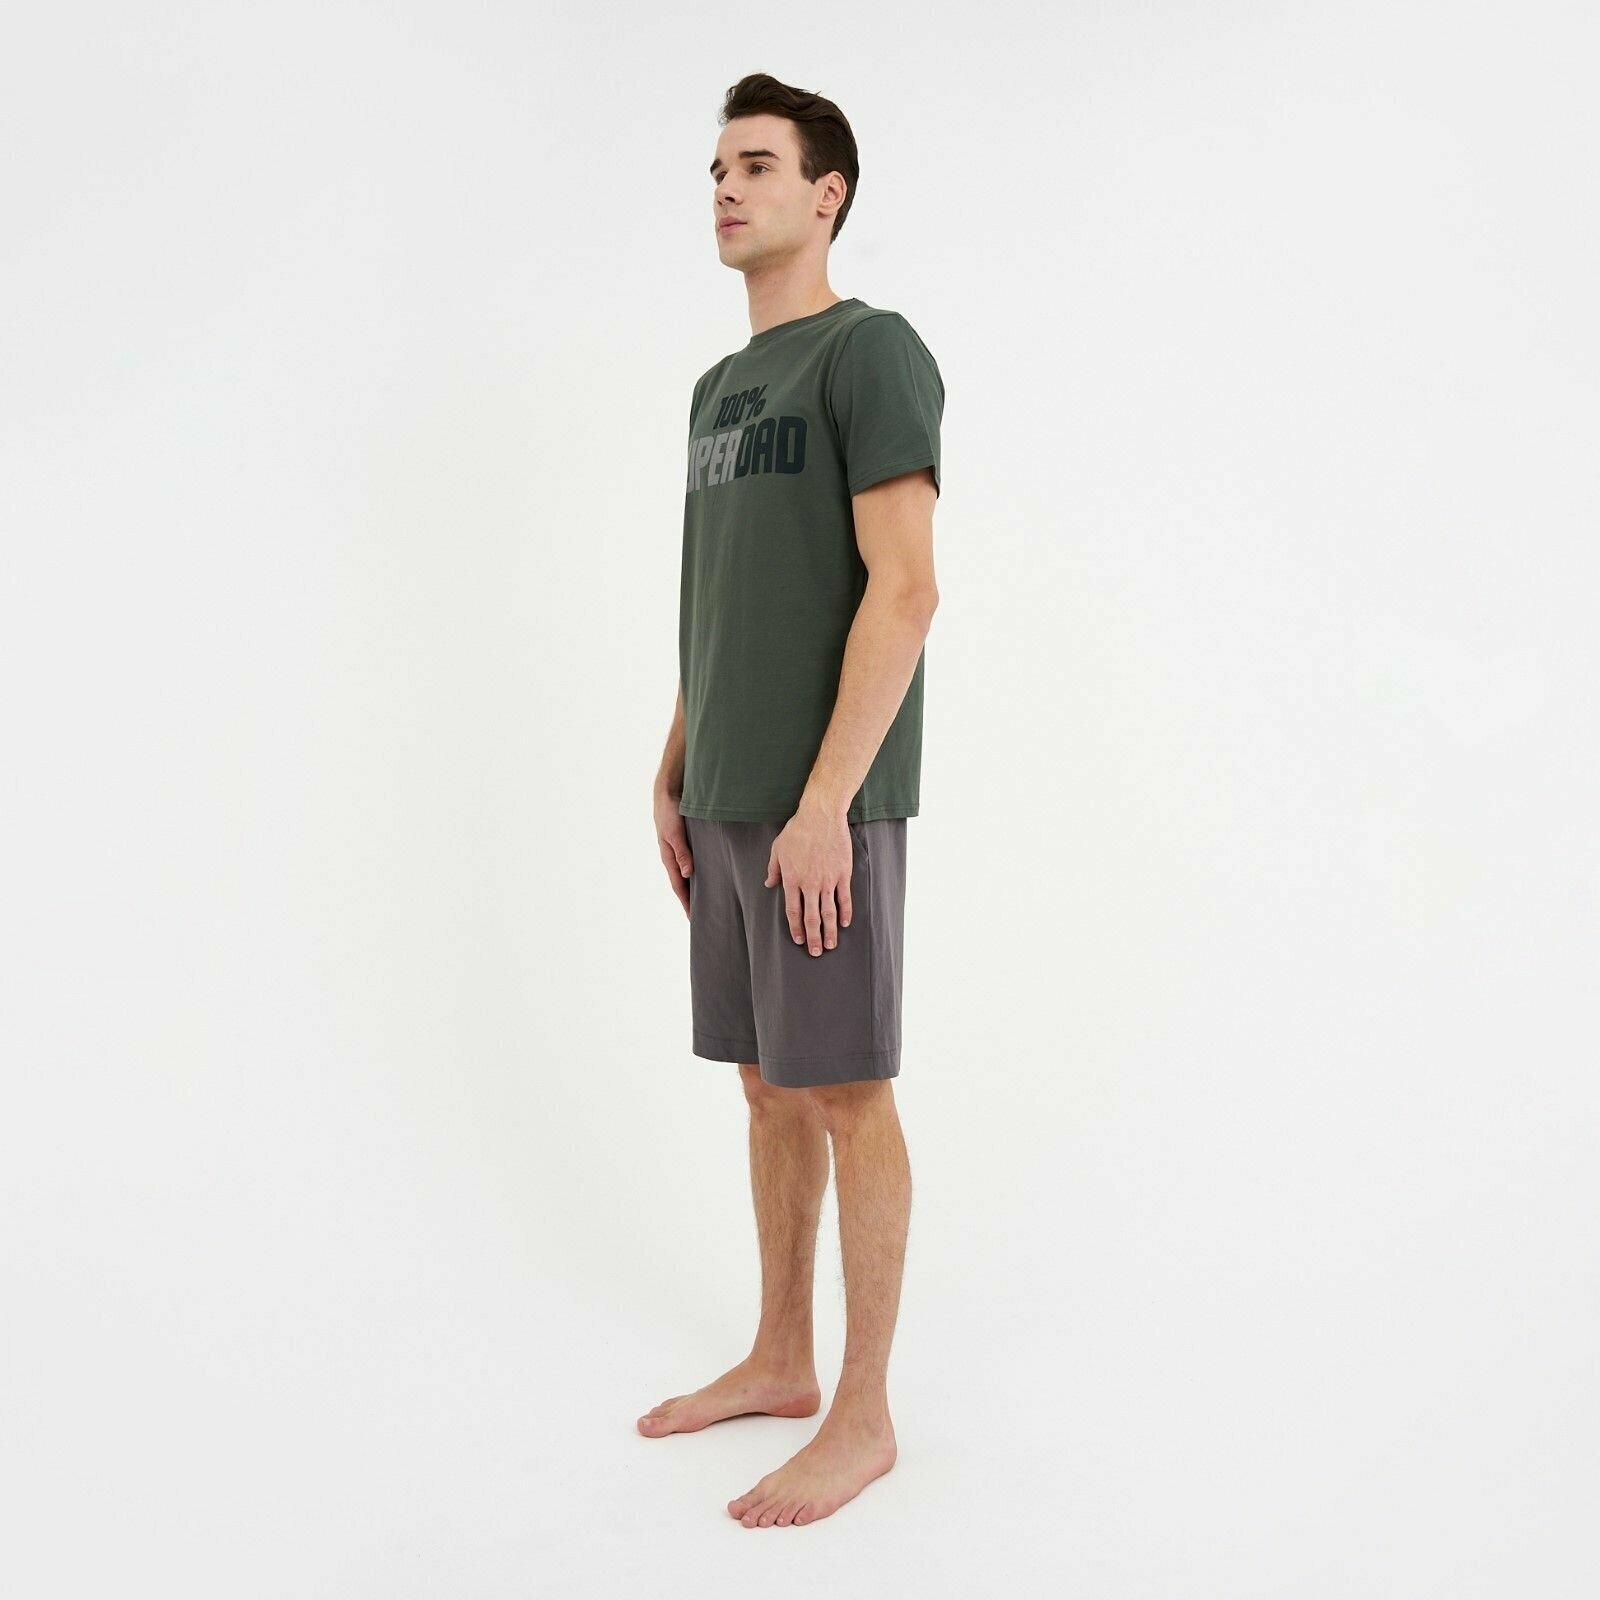 Пижама Kaftan, шорты, футболка, размер 52, зеленый - фотография № 3